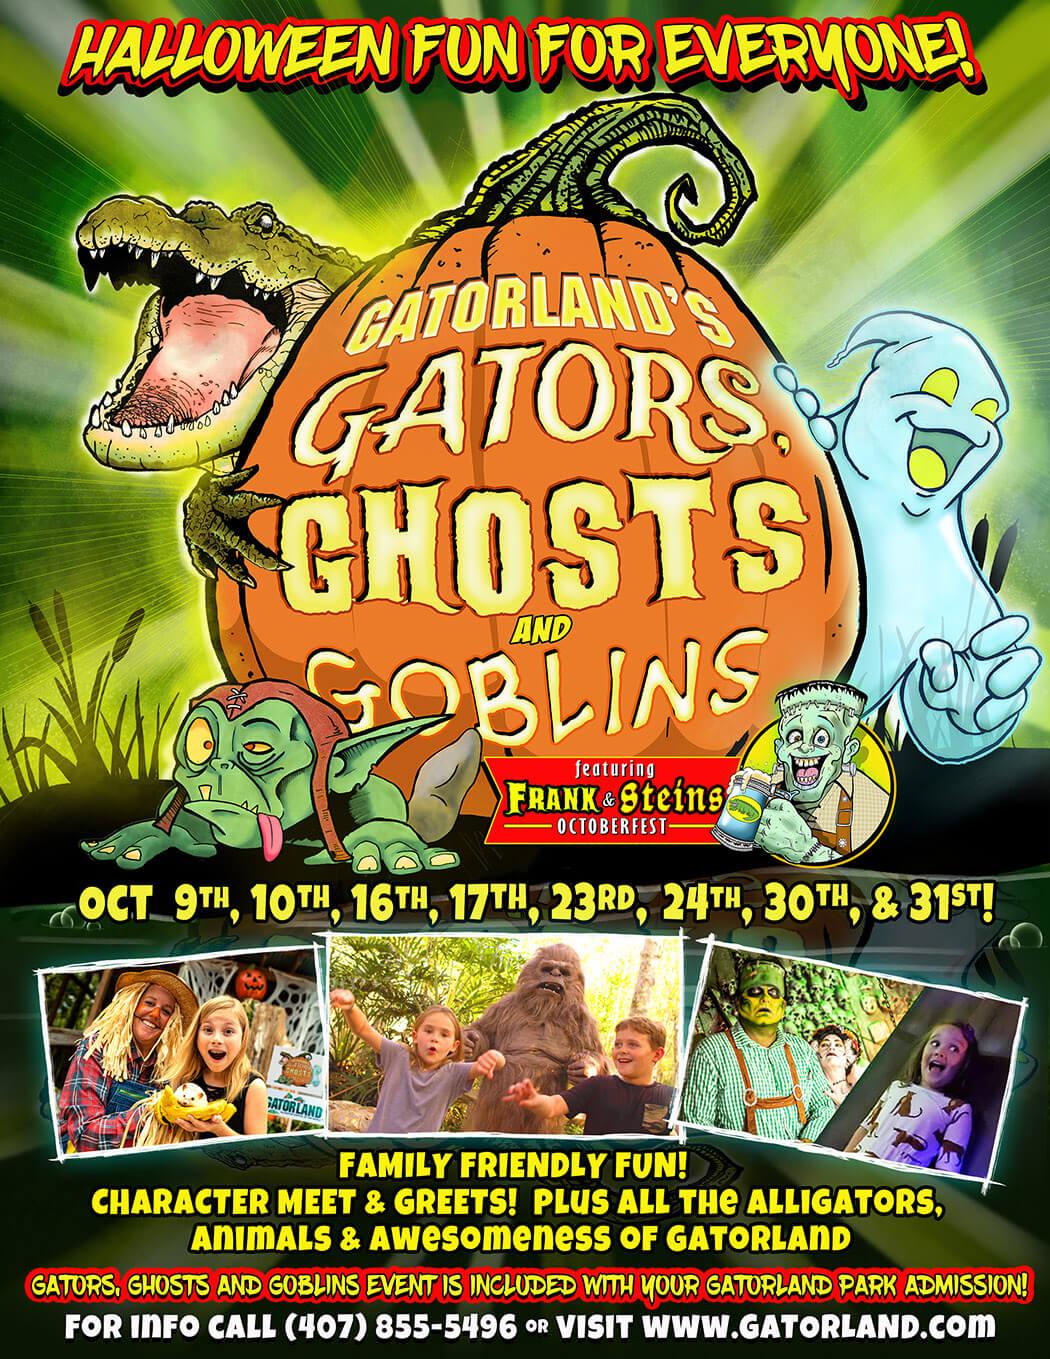 Gatorland's Gators Ghosts and Goblins Halloween event 2021